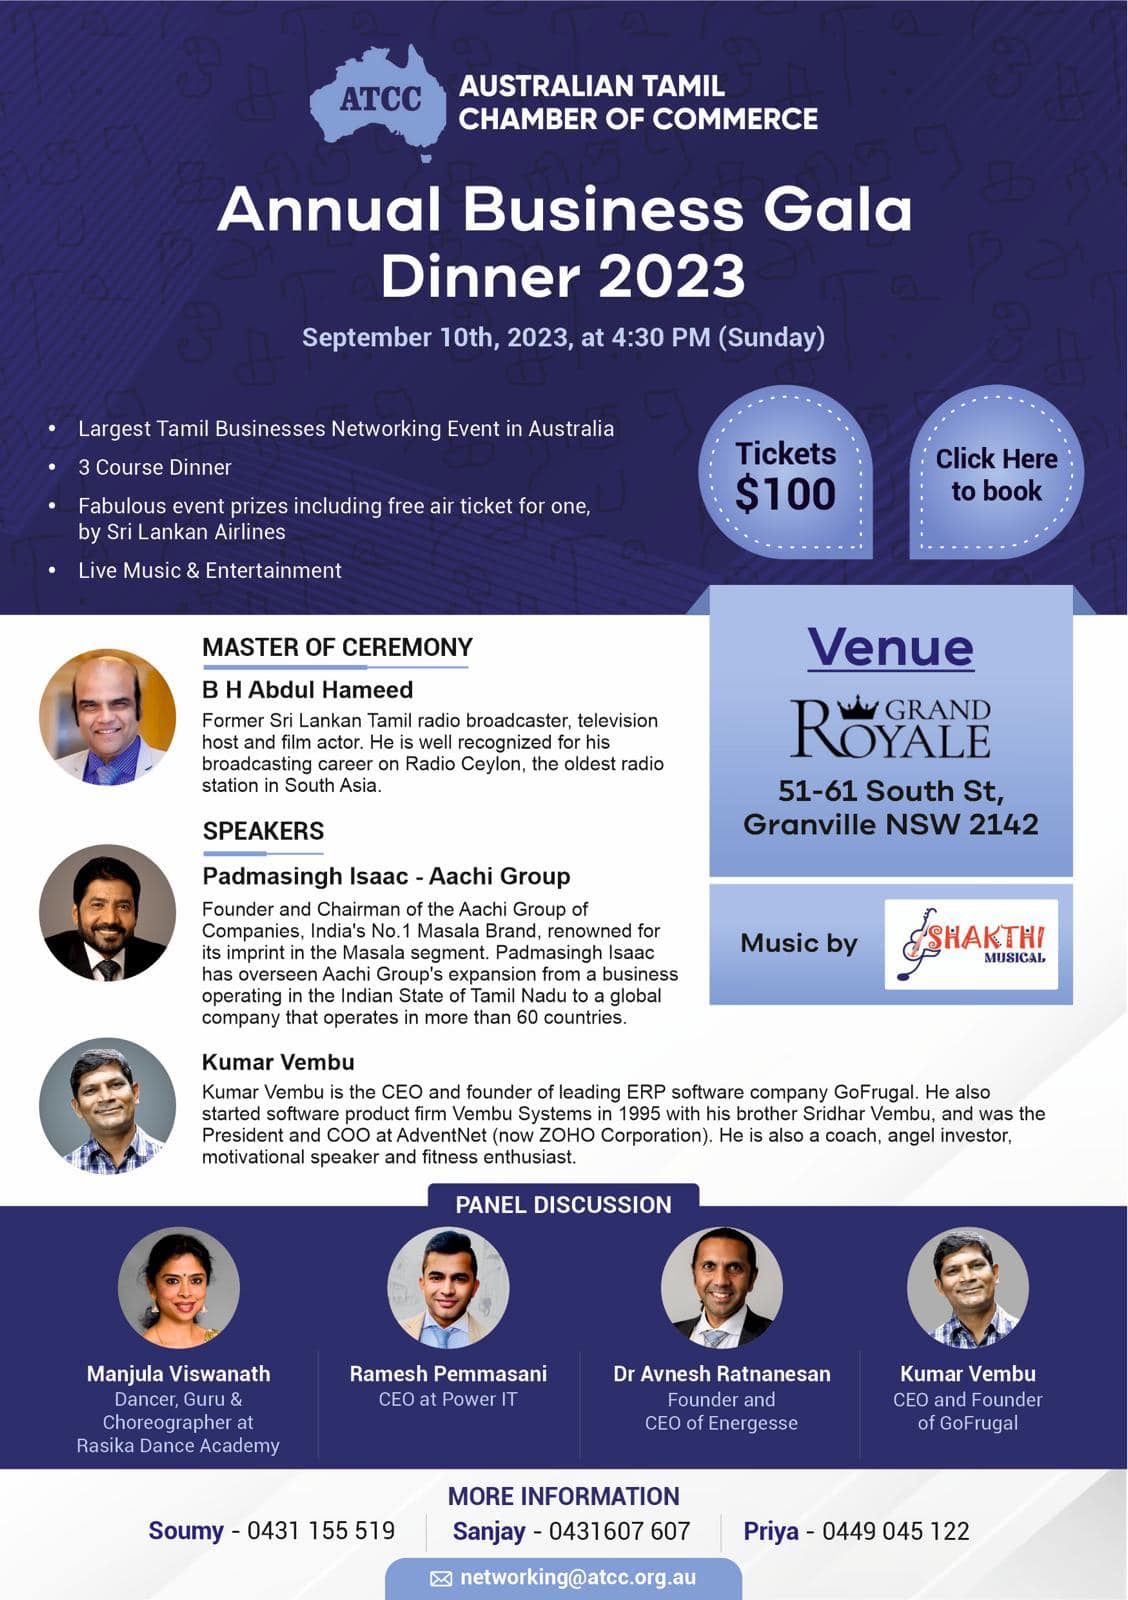 ATCC Annual Business Gala Dinner 2023
